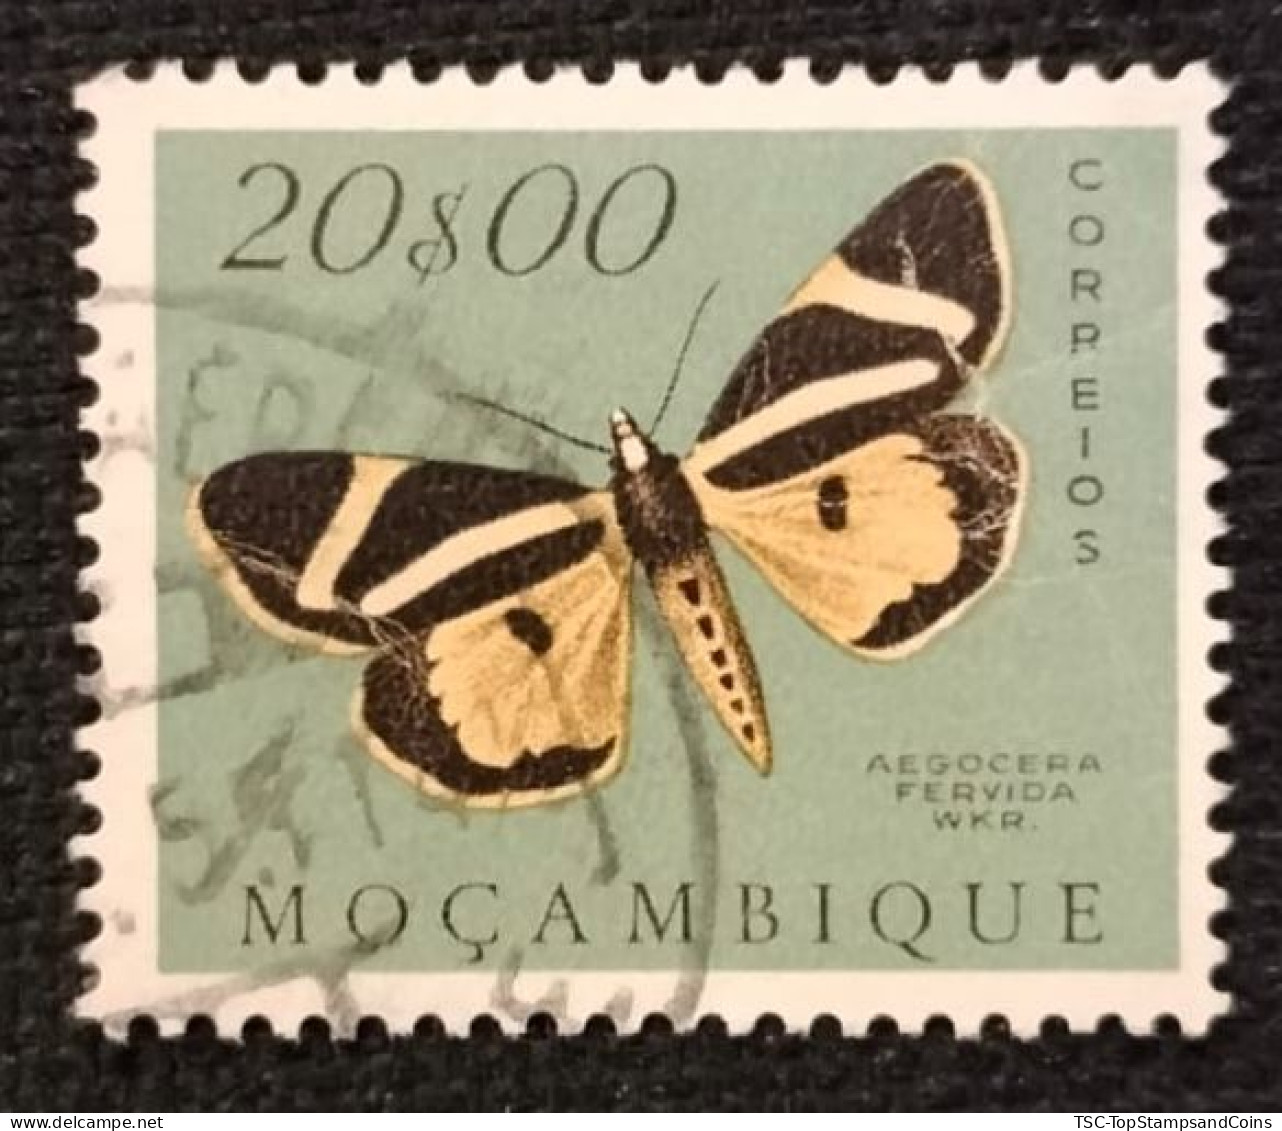 MOZPO0407U4 - Mozambique Butterflies - 20$00 Used Stamp - Mozambique - 1953 - Mosambik